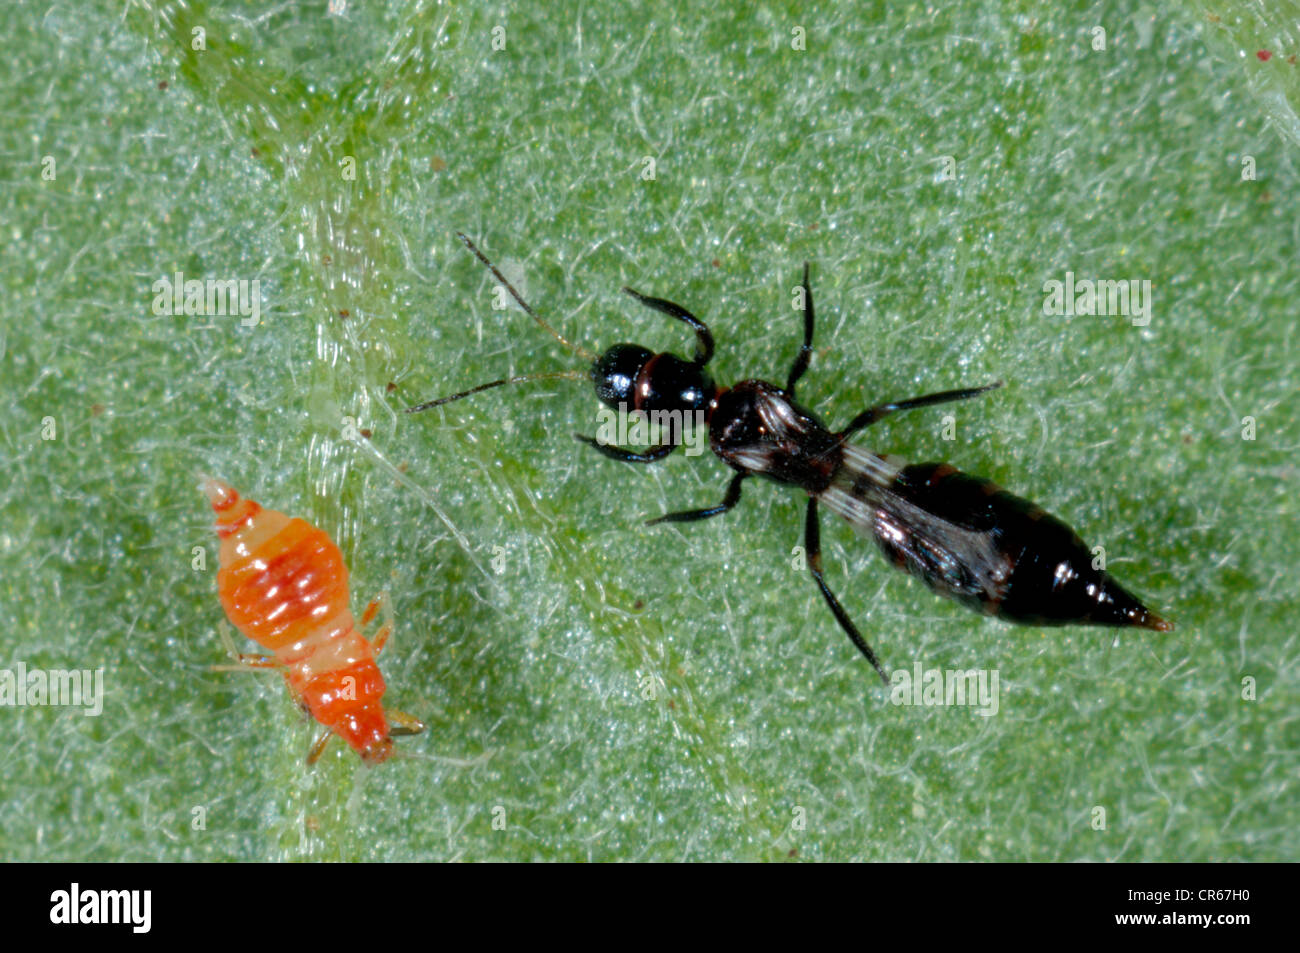 Predatory thrips (Franklinothrips vespiformis) larva and adult Stock Photo